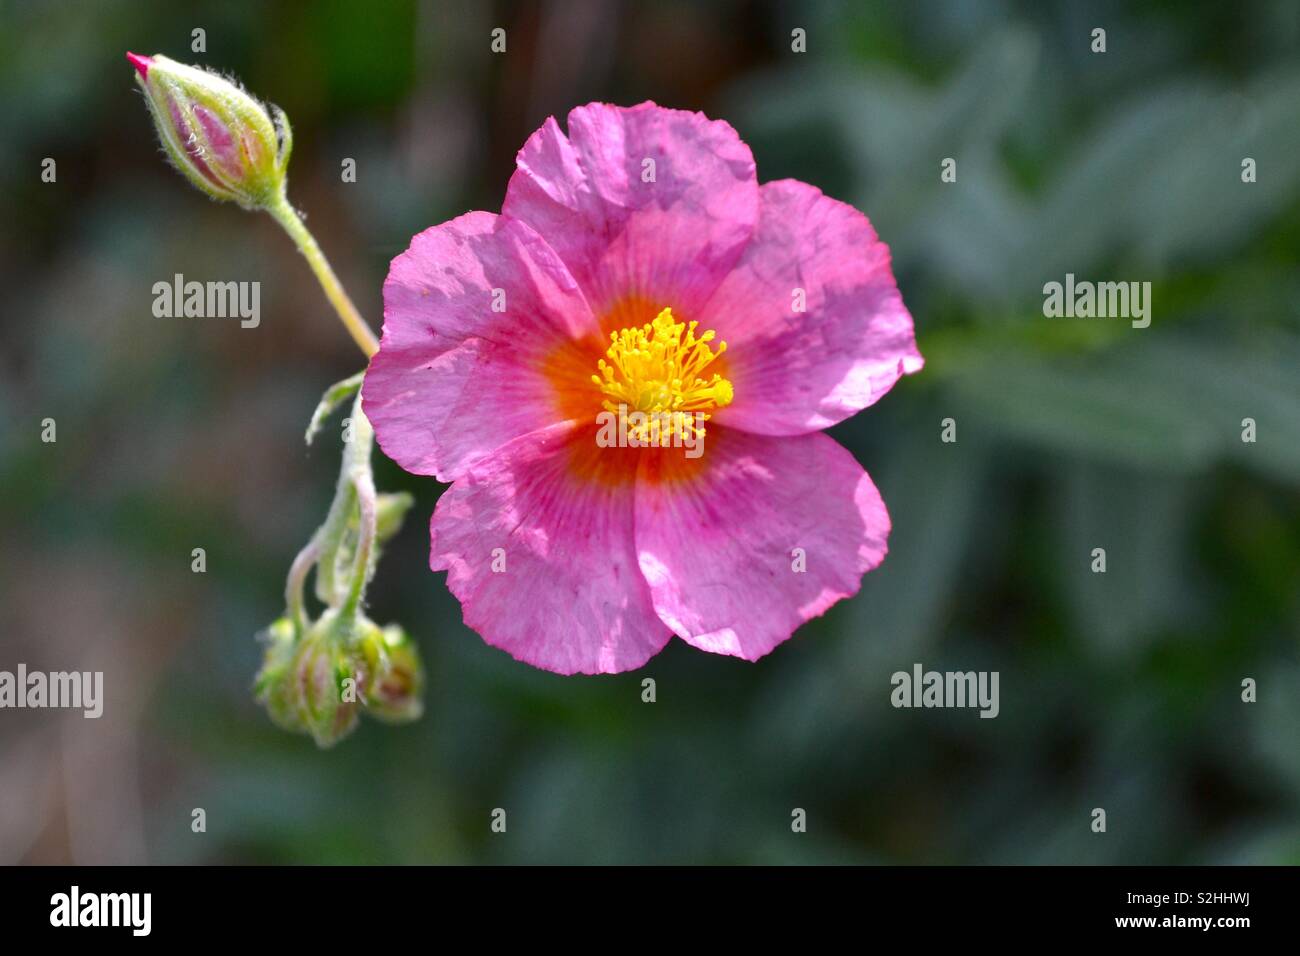 Pink flower yellow stamens Stock Photo